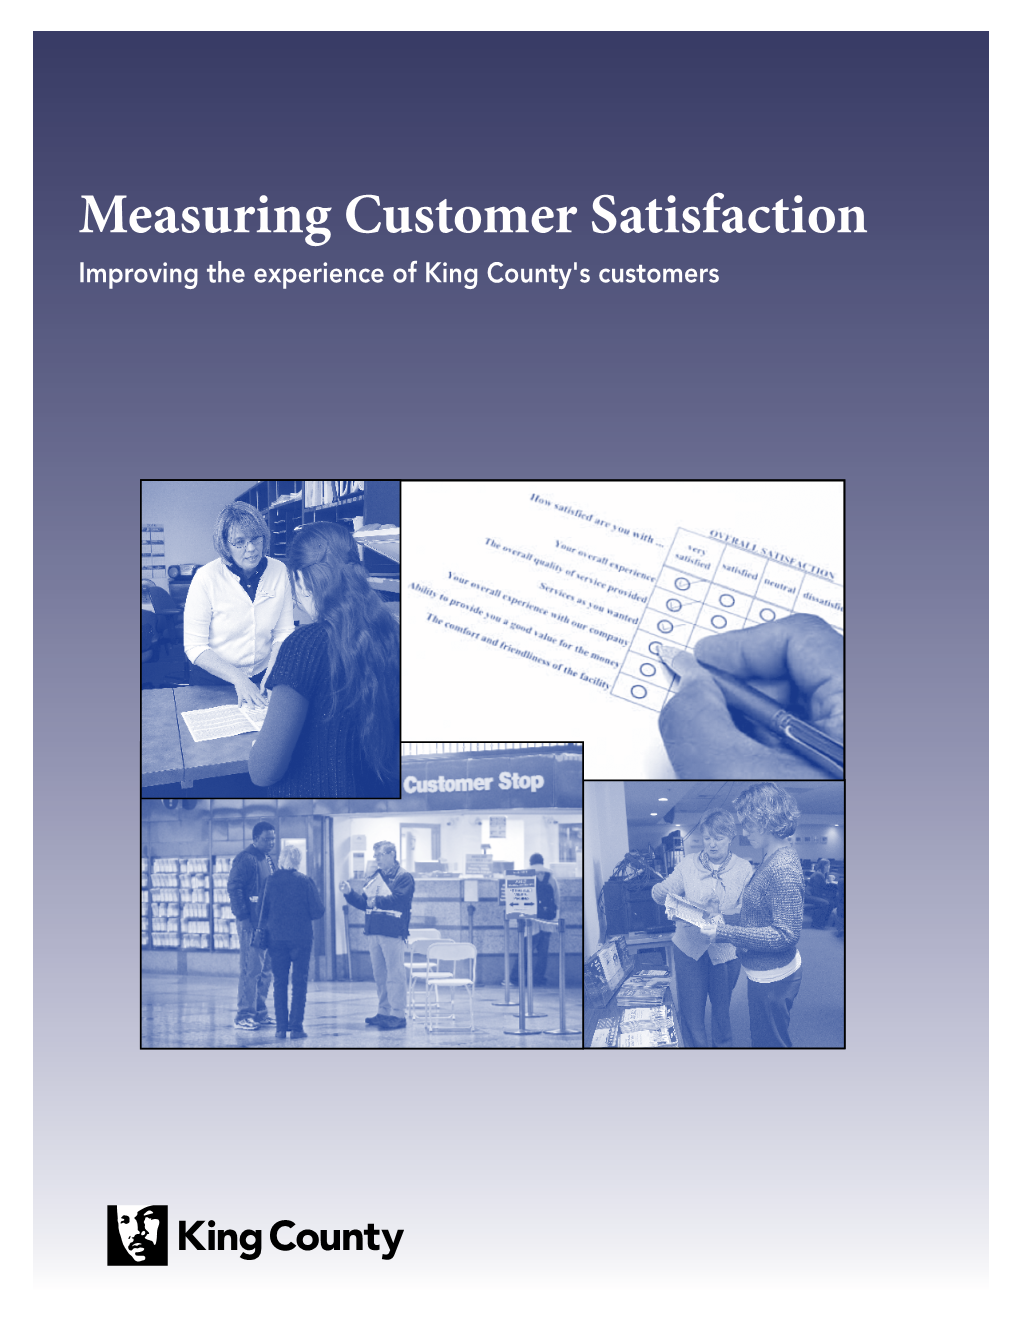 King County: Measuring Customer Satisfaction